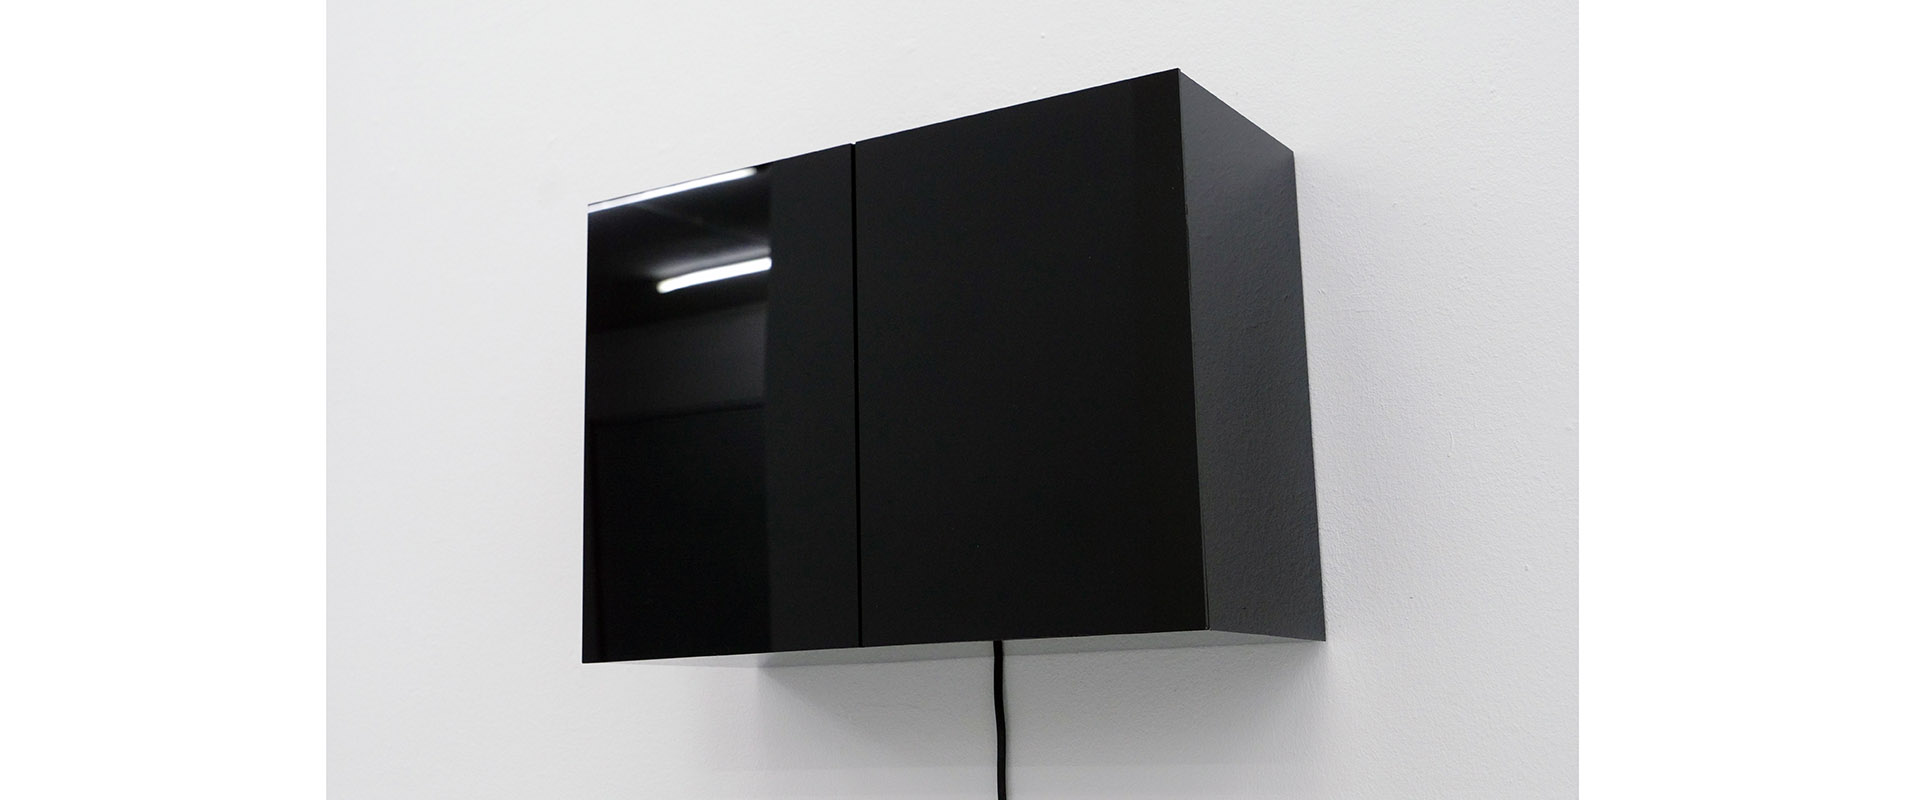 2-parts - 2019, kinetische Soundskulptur; Arduino, Acrylglas, 28,6 x 40 x 16,4 cm